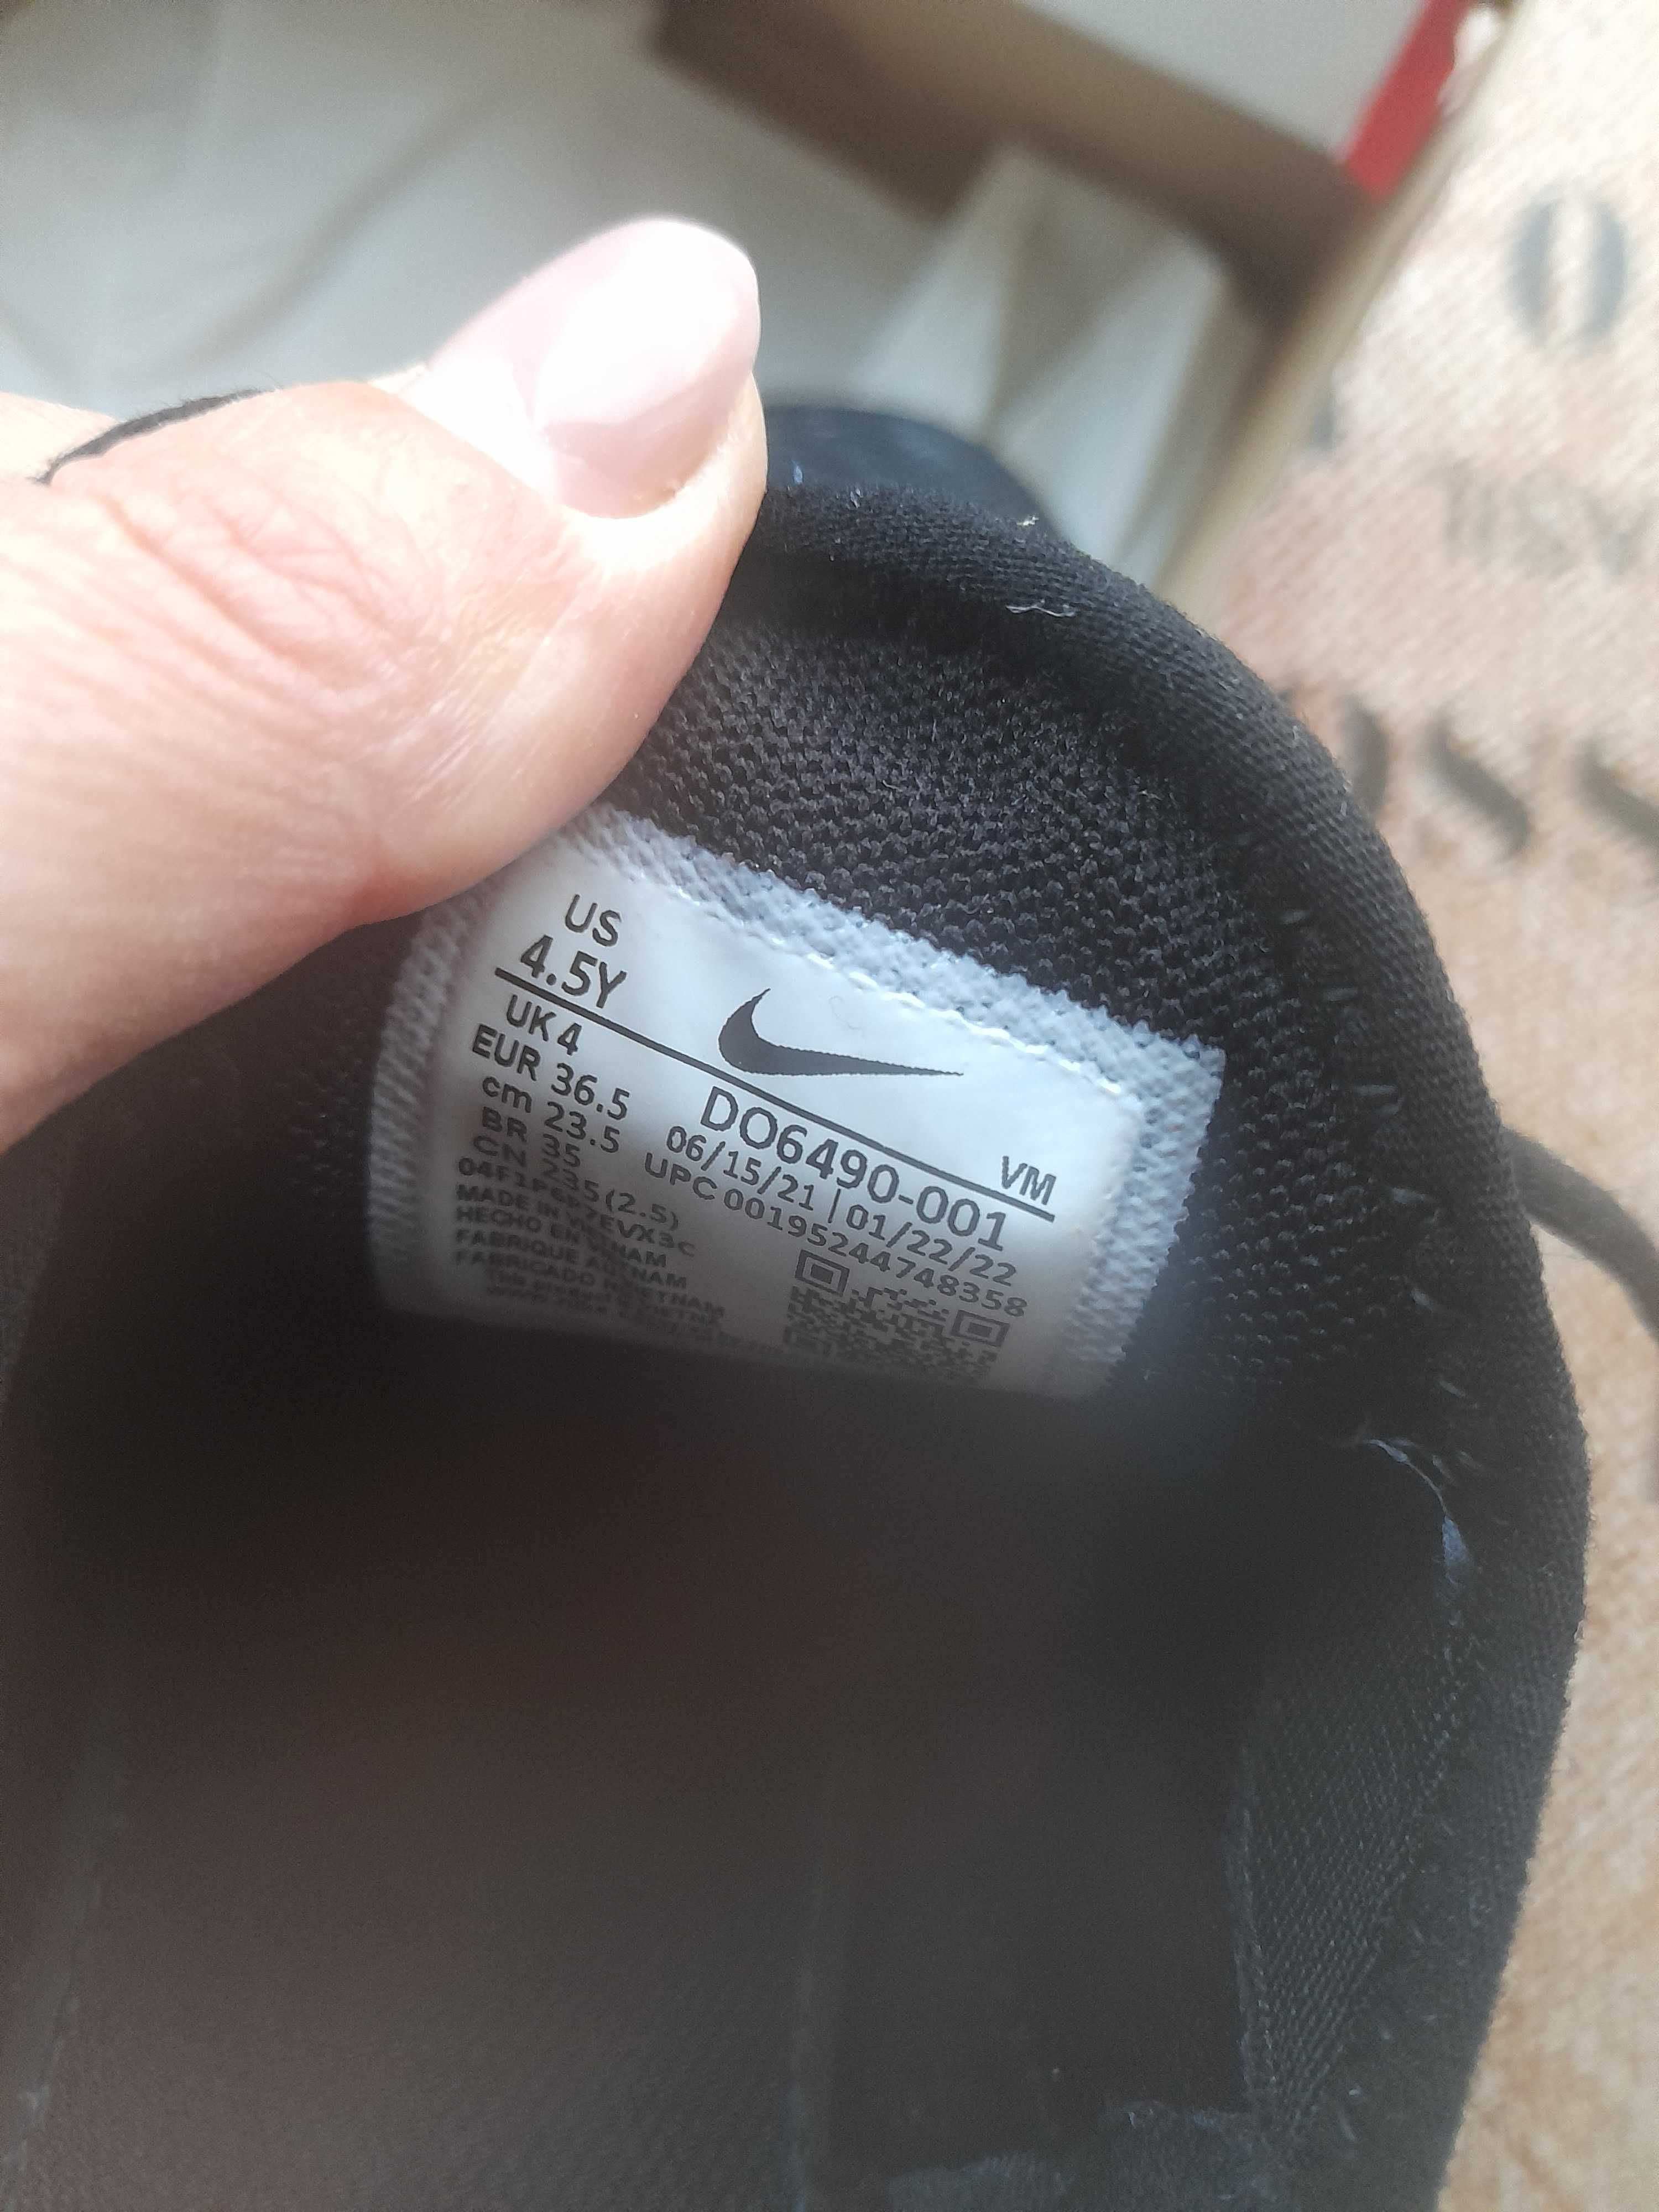 Adidasi Nike copii 36.5